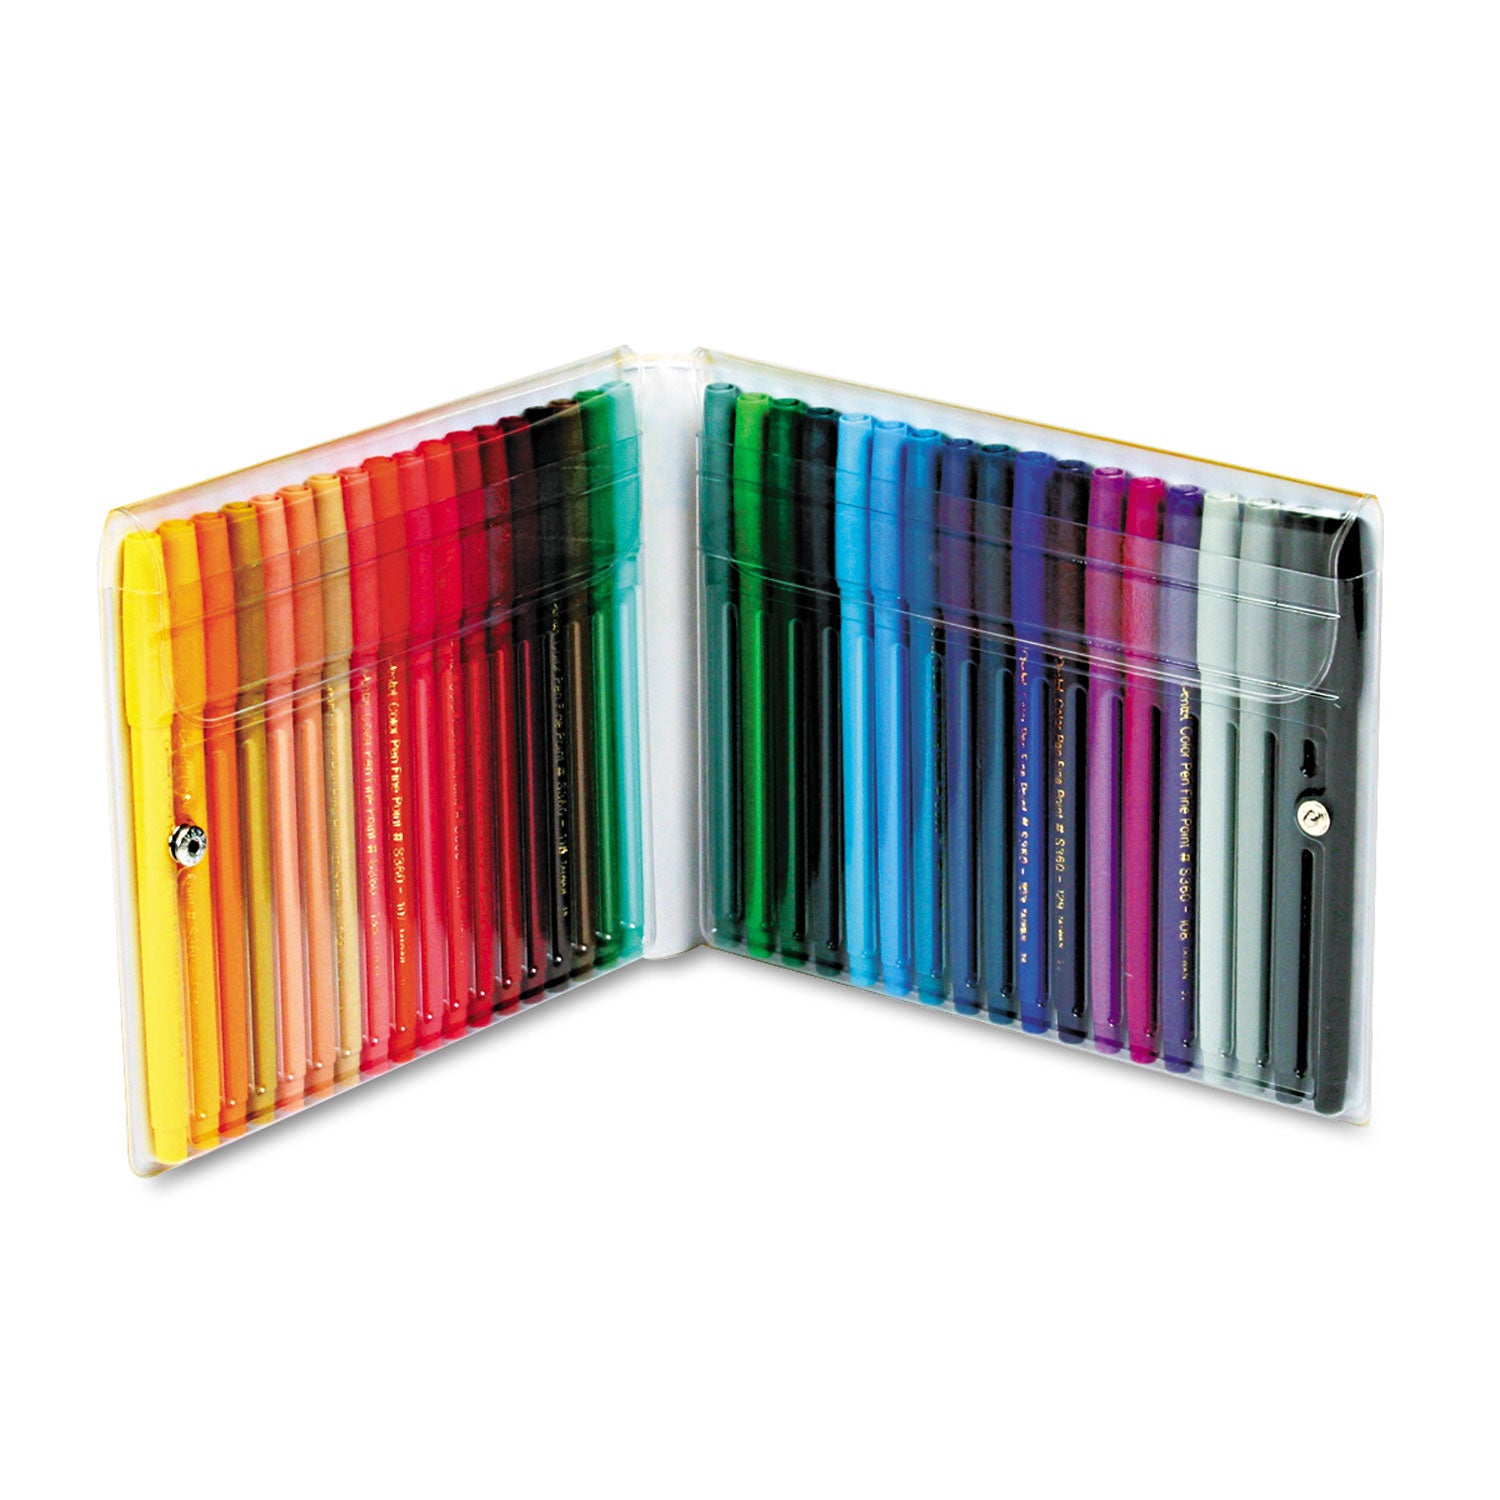 Fine Point 36-Color Pen Set, Fine Bullet Tip, Assorted Colors, 36/Set - 